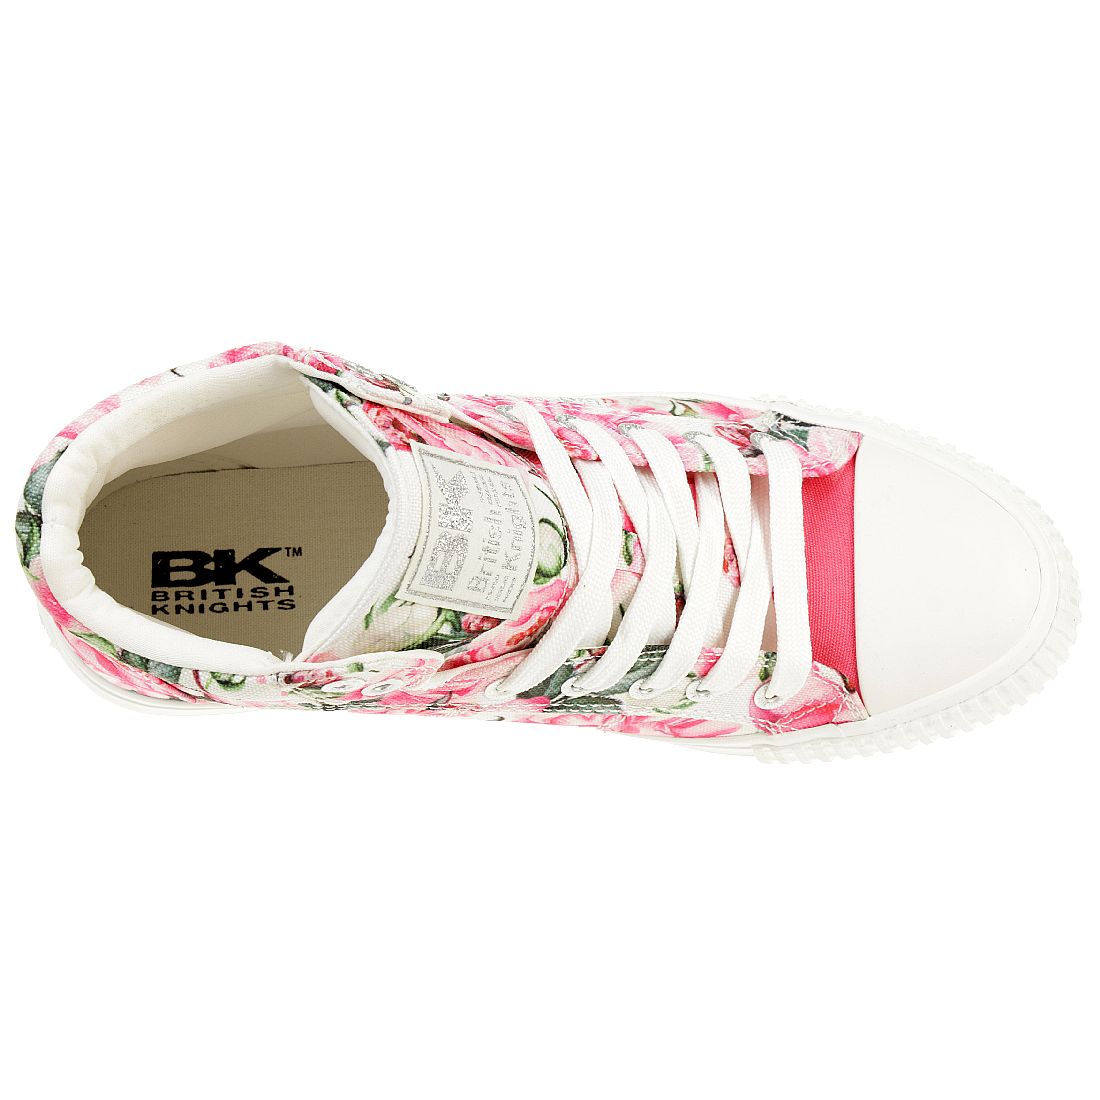 British Knights DEE BK Damen Sneaker B43-3730-05 pink flower